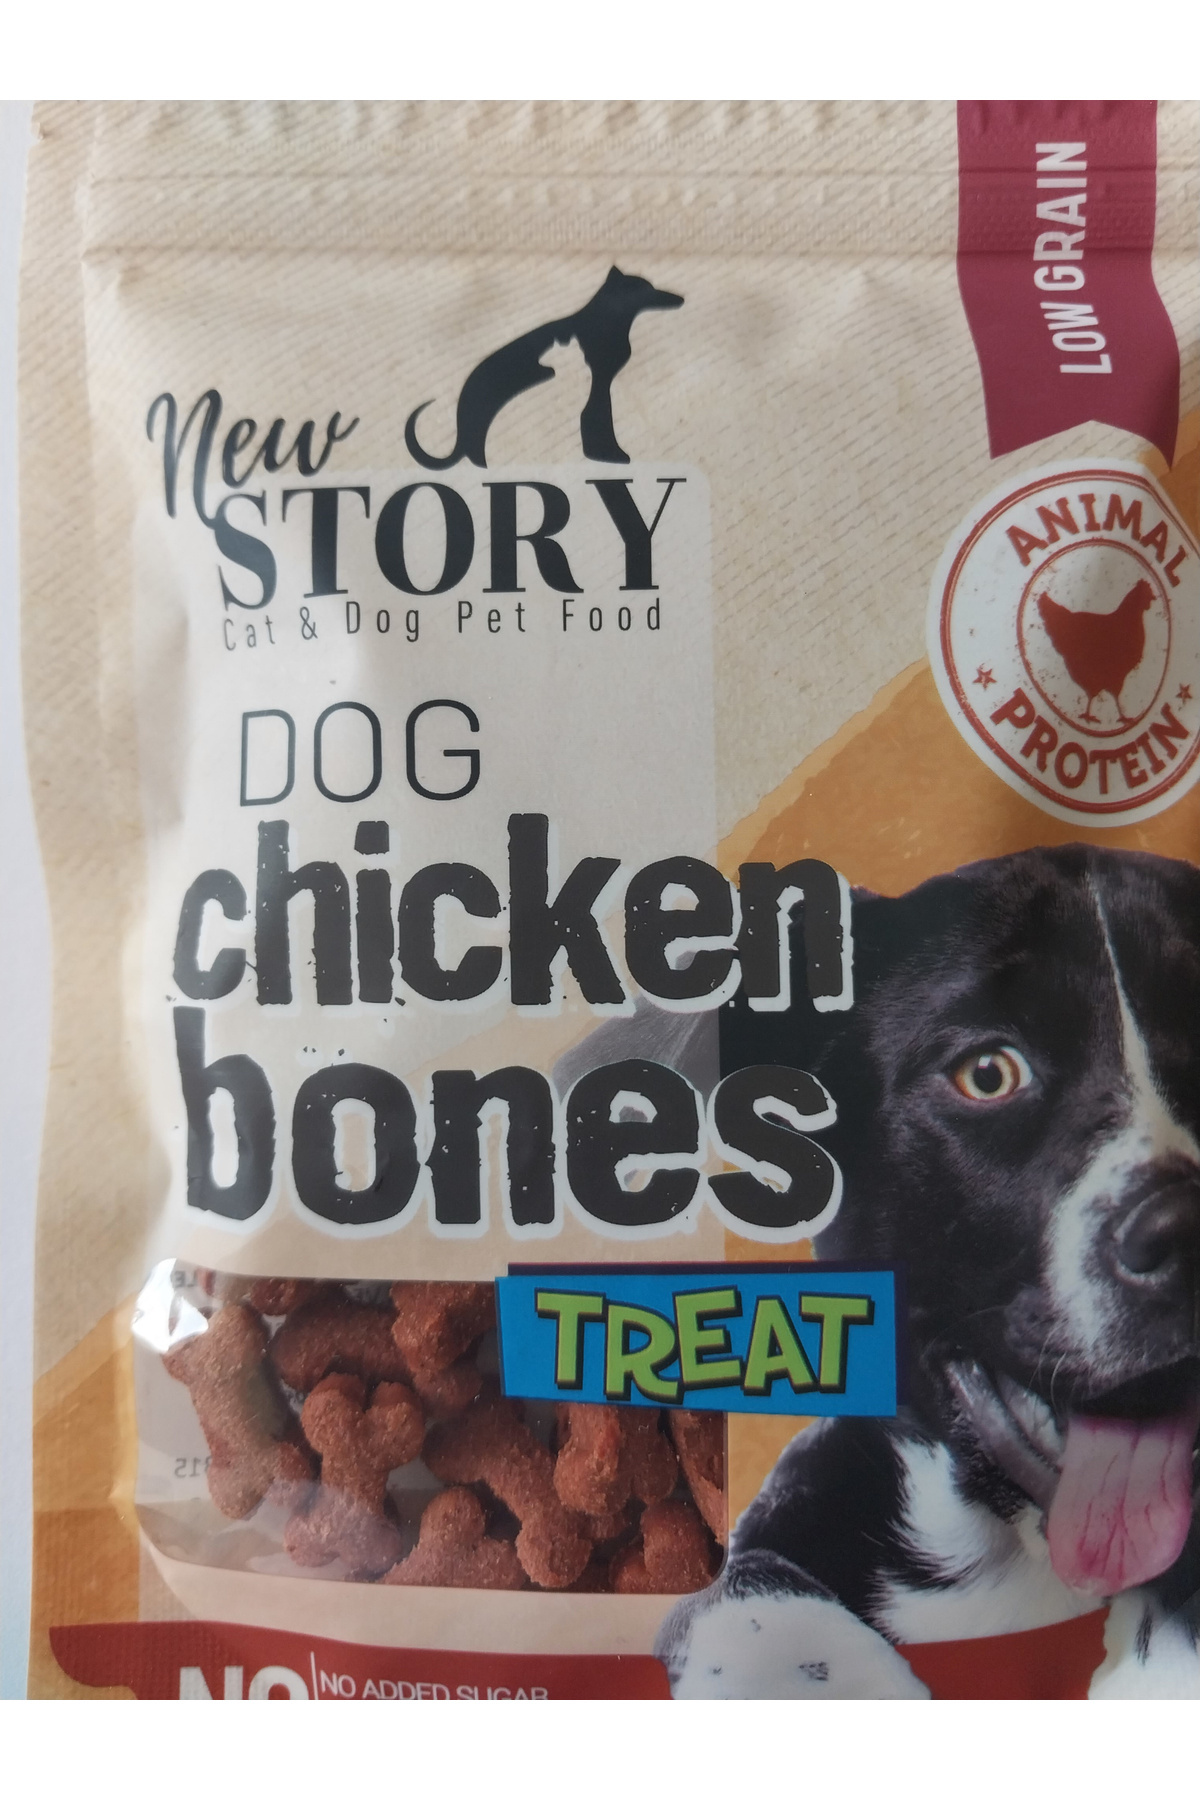 New Story Dog Chicken Bones Tavuk Etli Kopek Odulu Yumusak, Atistirmalik 80 gr